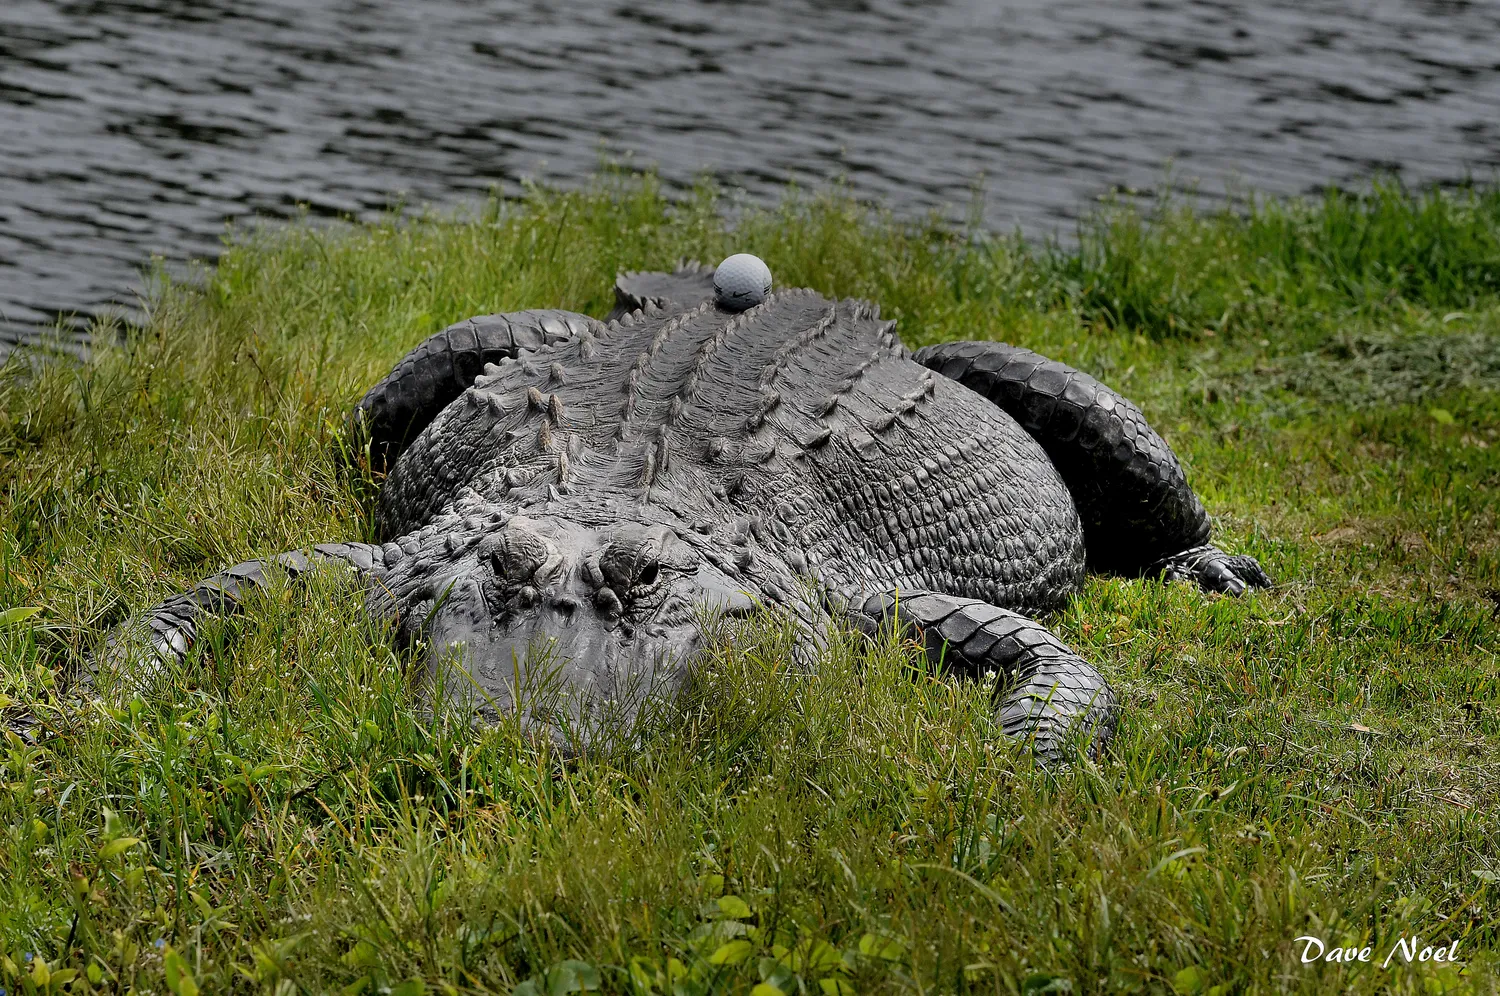 Alligator with a golf ball